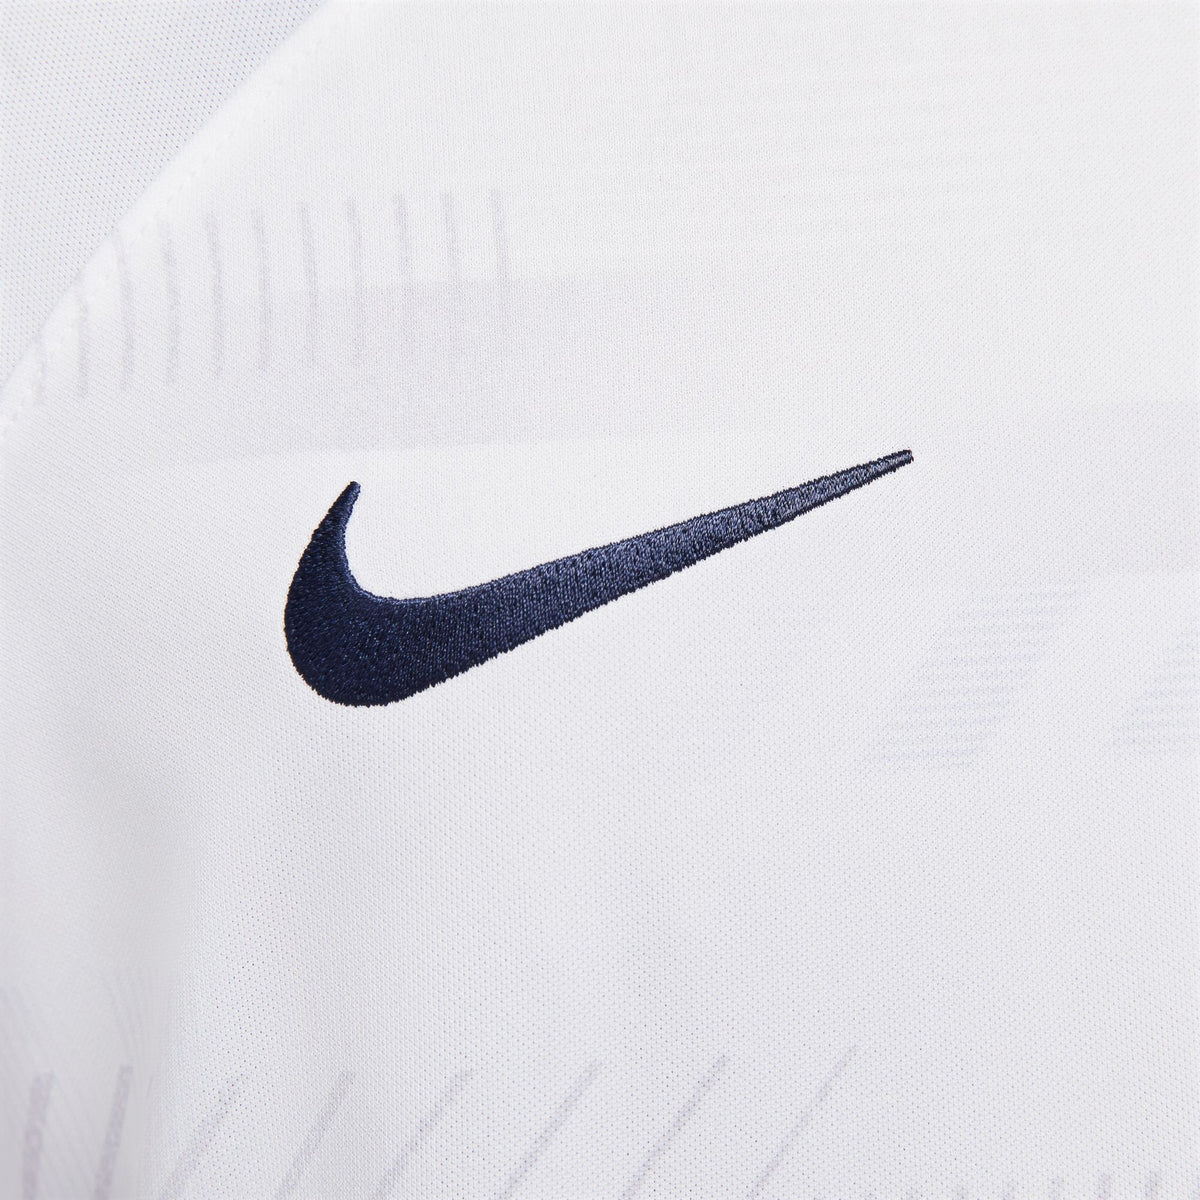 Tottenham Hotspur 2023-24 Nike Home Kit - Football Shirt Culture